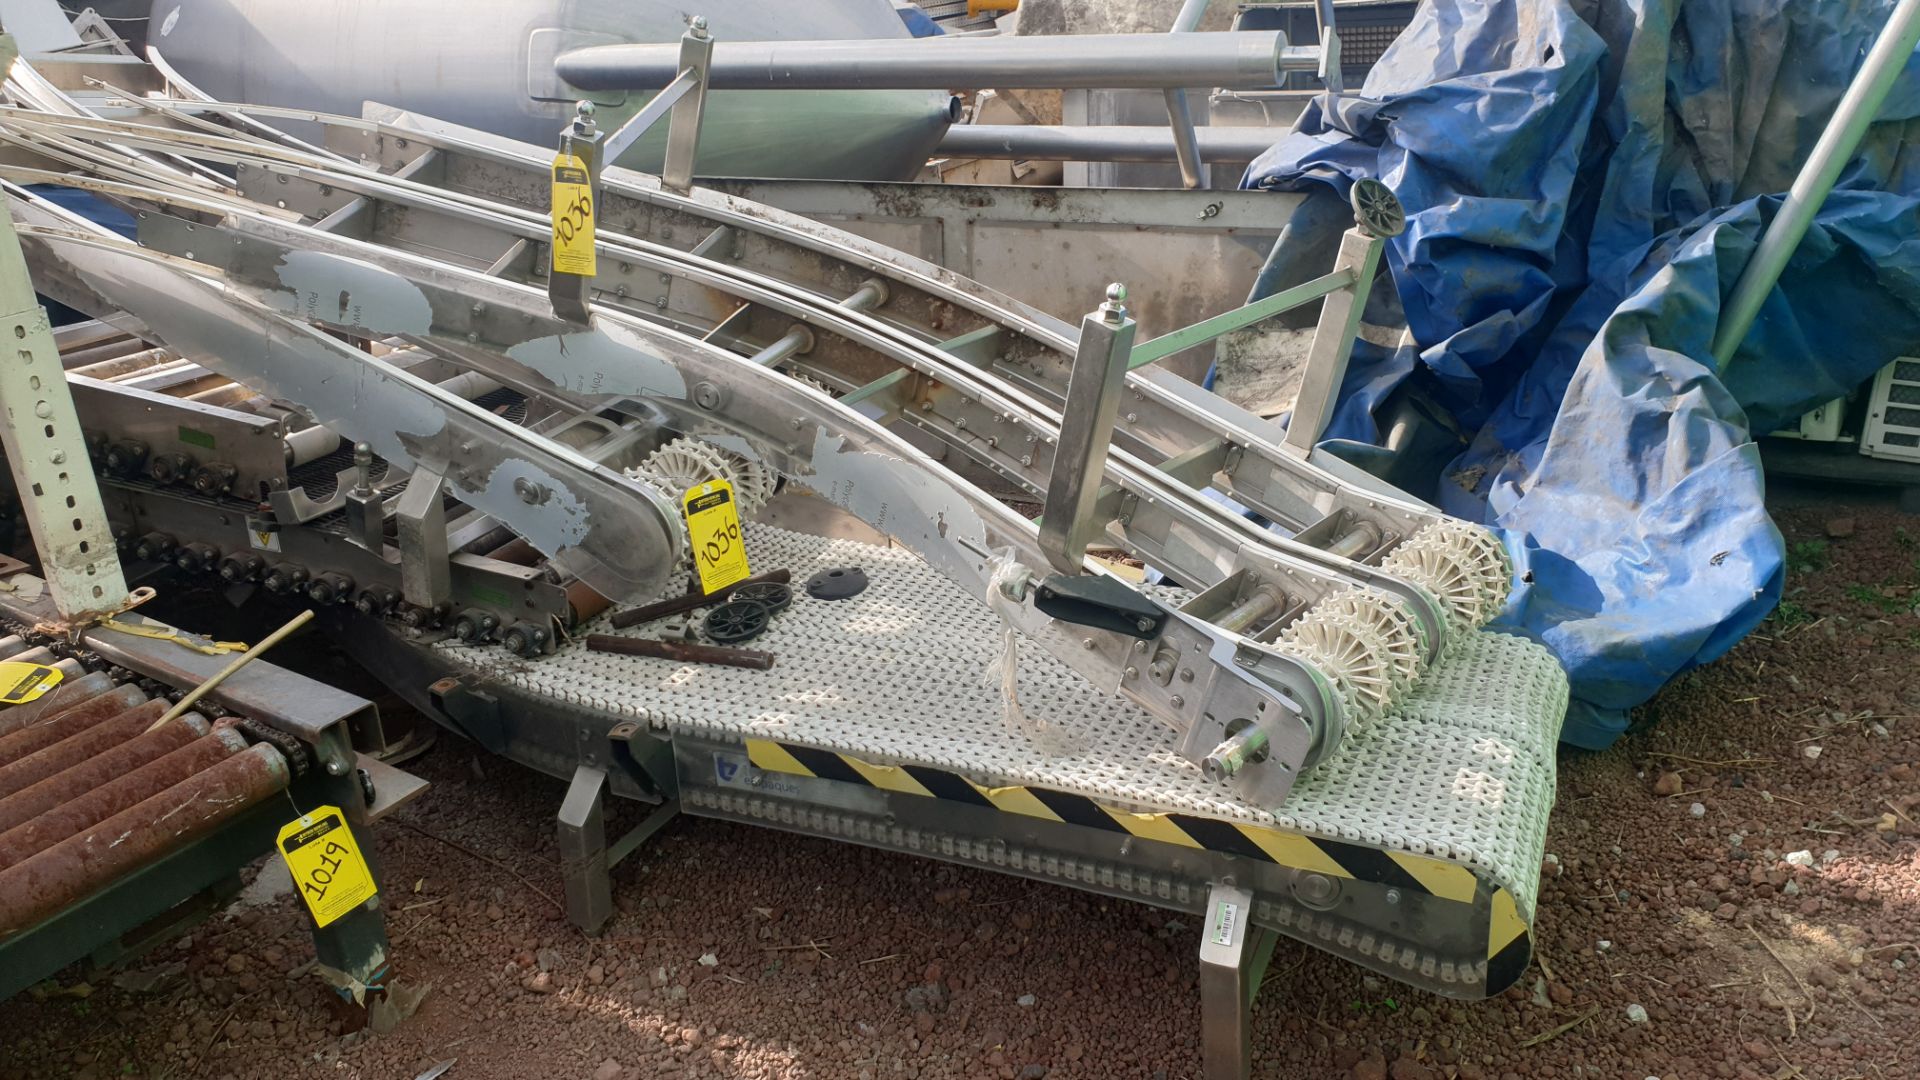 S conveyor belt batch. Please inspect - Image 6 of 9